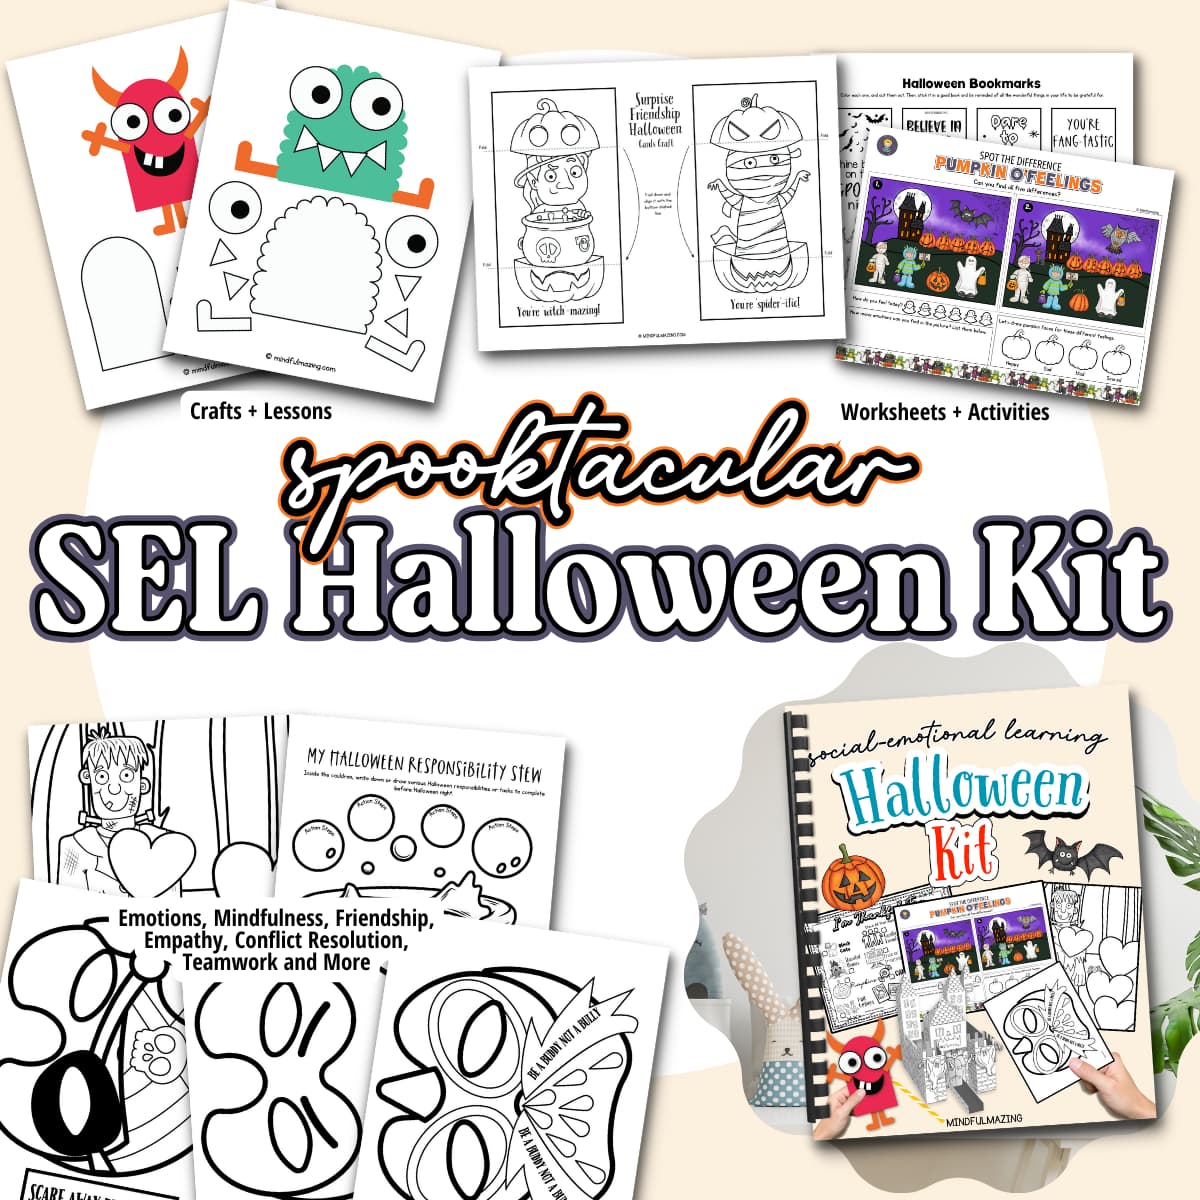 SEL Halloween-Themed Kit